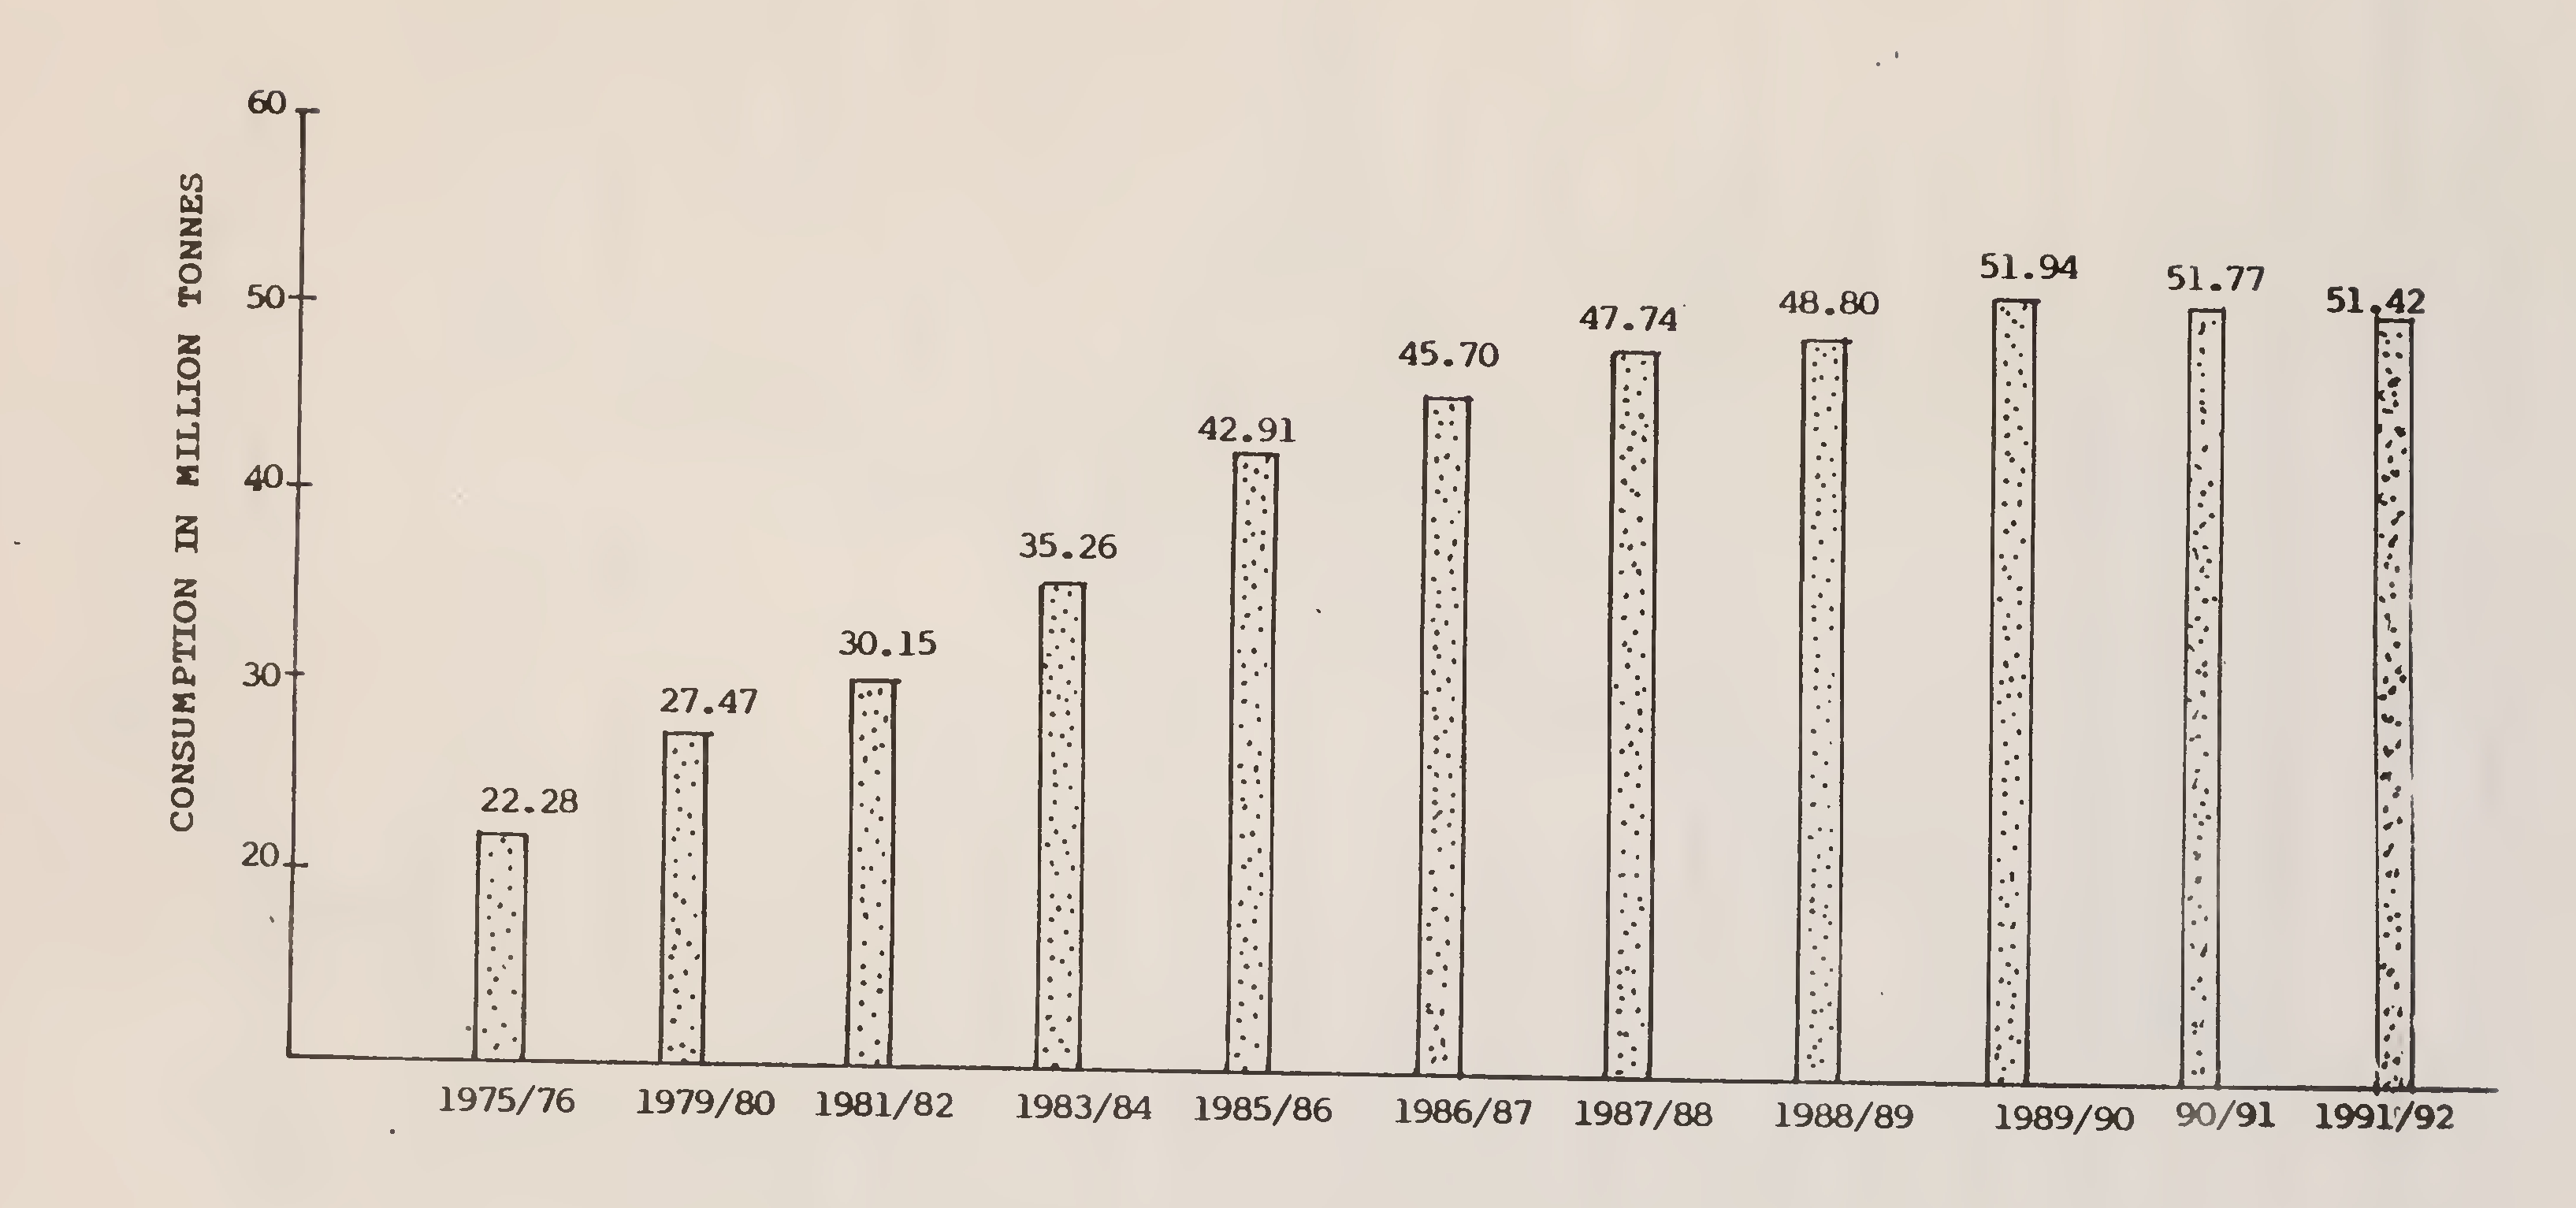 Fig. 5. Consumption of erude oil in India